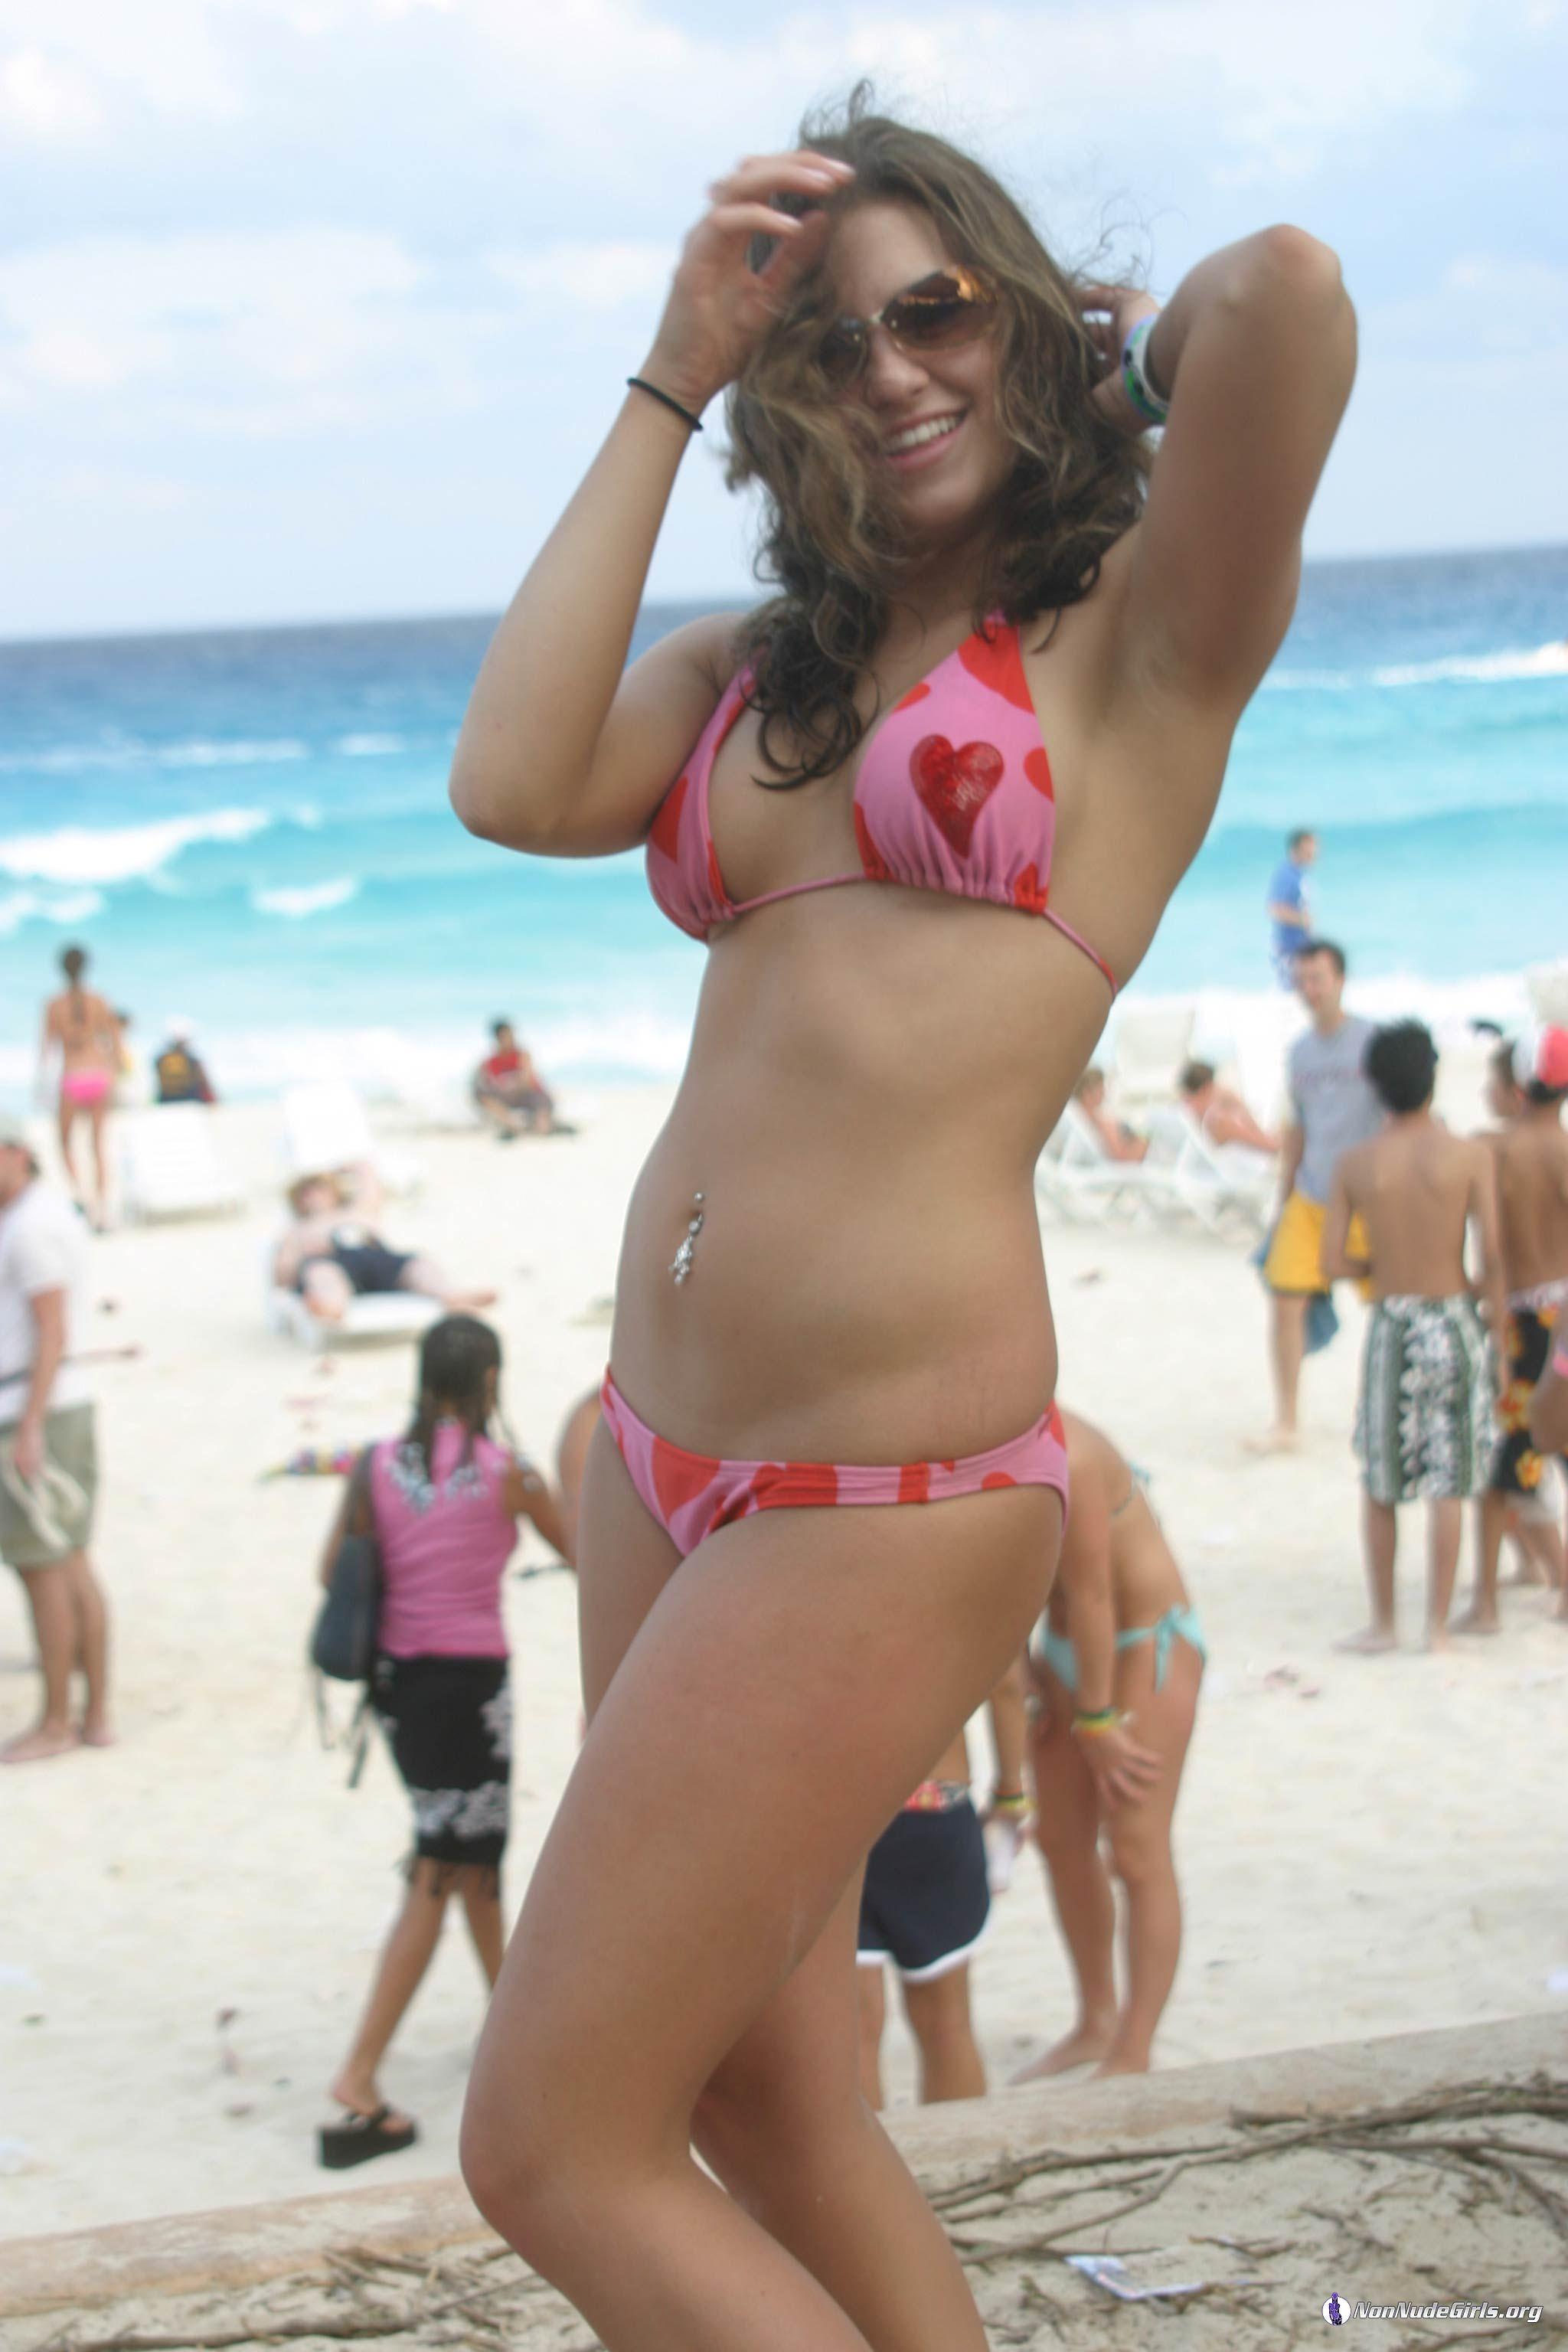 Pictures of hot teen coeds in bikinis #60678508